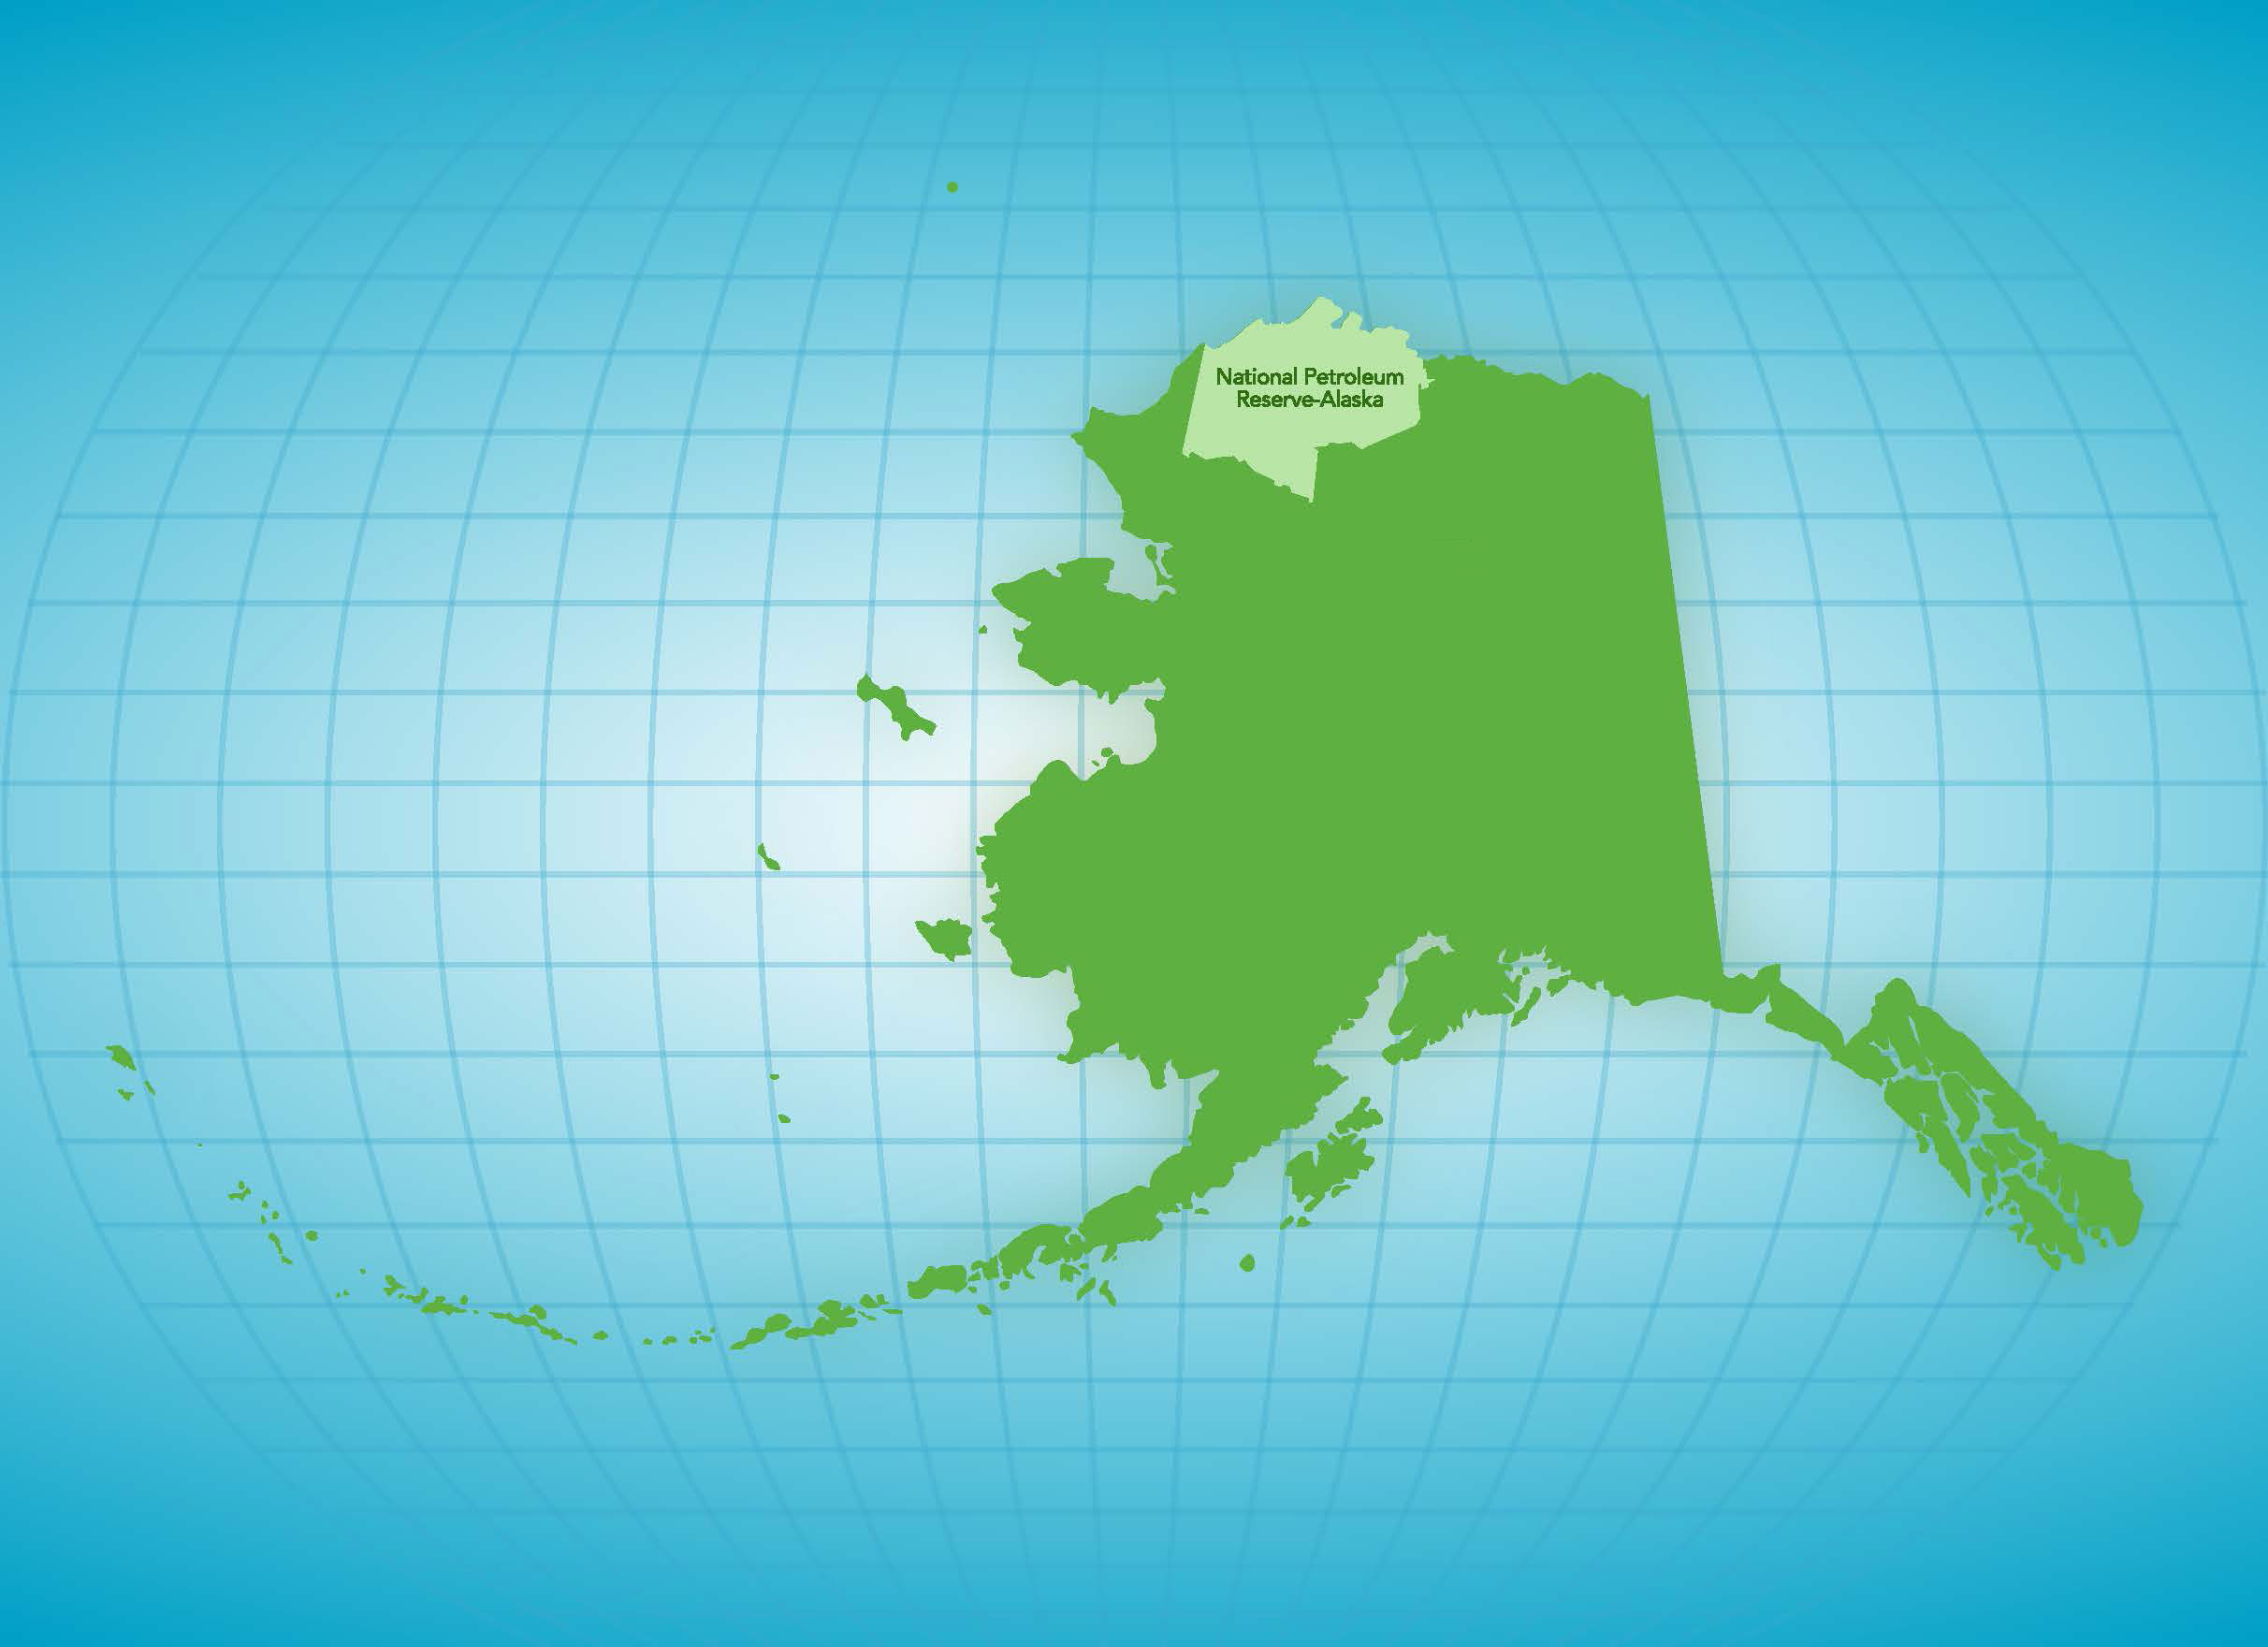 Map of Alaska with NPR-A highlight